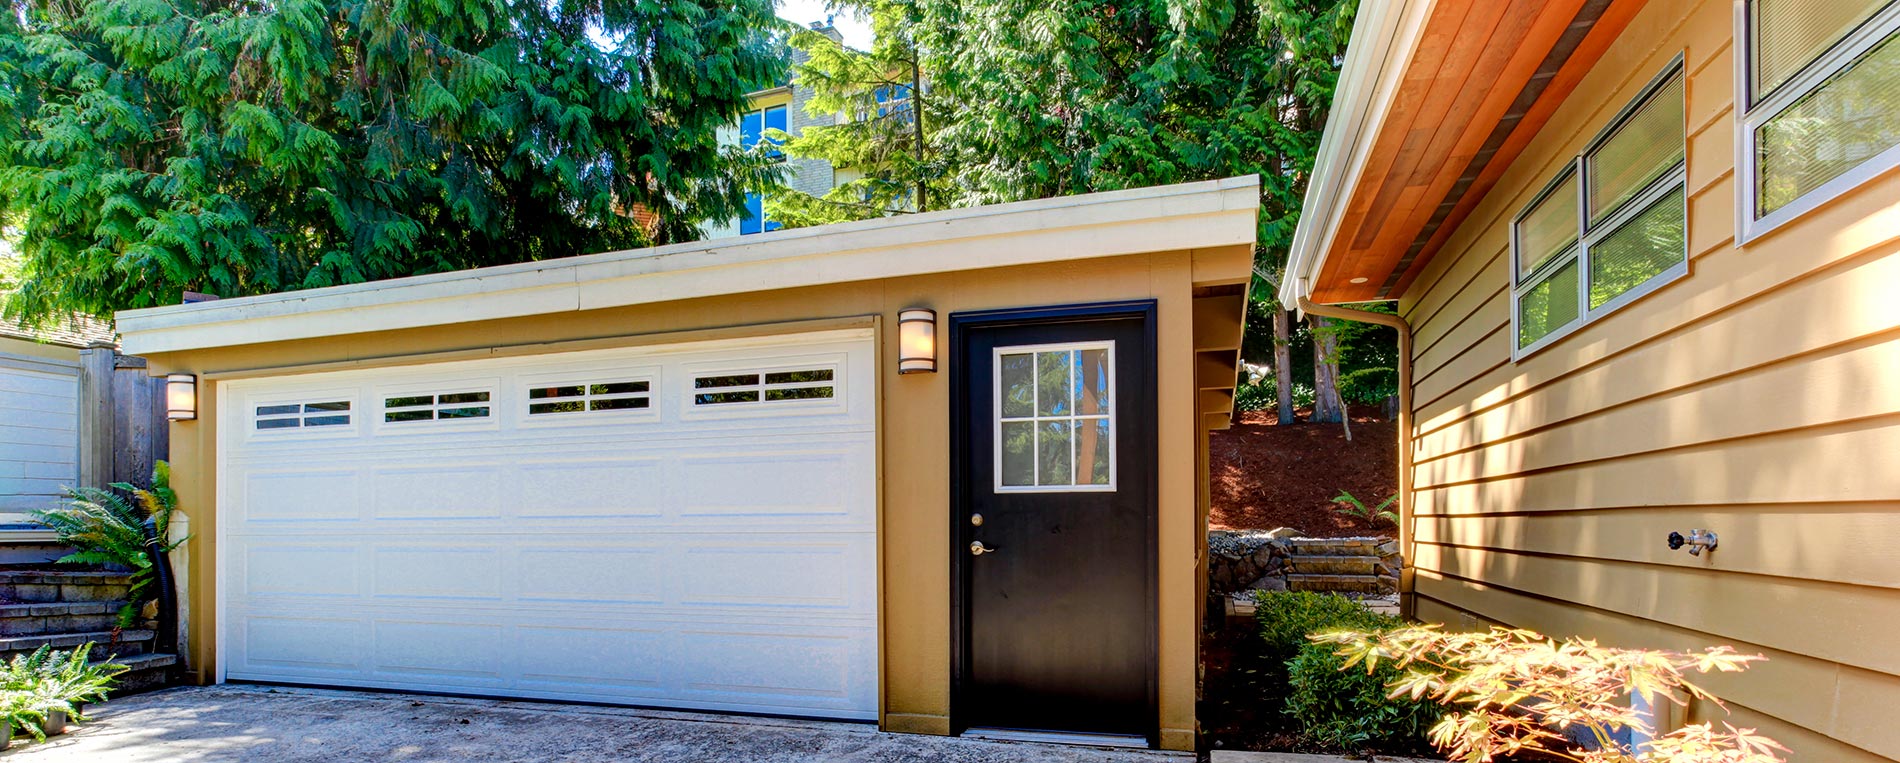 The Main Features LiftMaster Elite Garage Door Openers Have To Offer